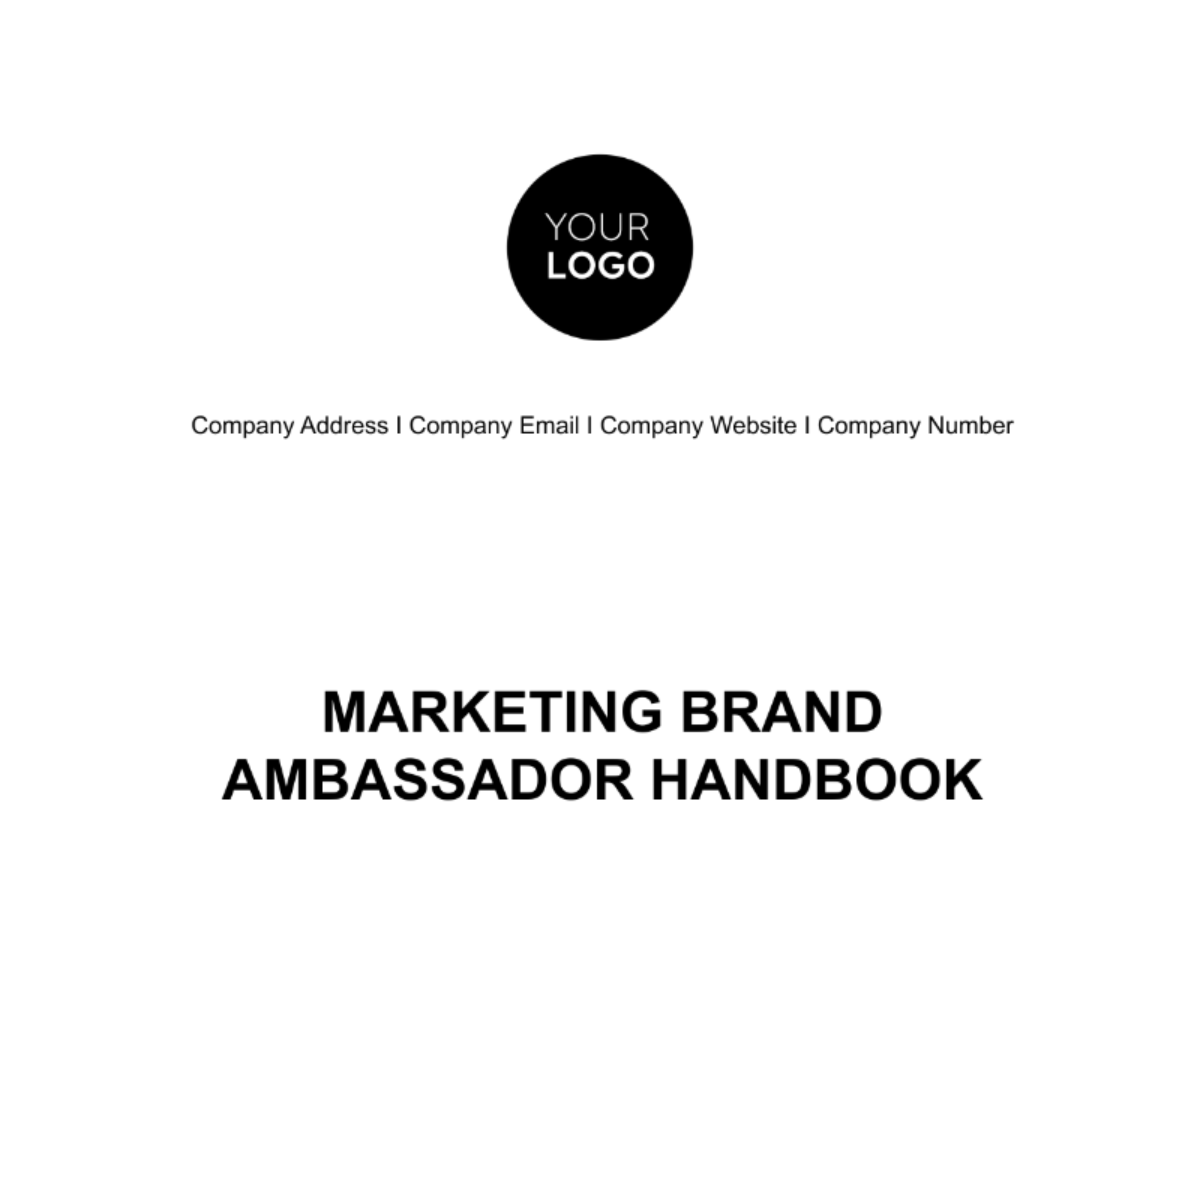 Marketing Brand Ambassador Handbook Template